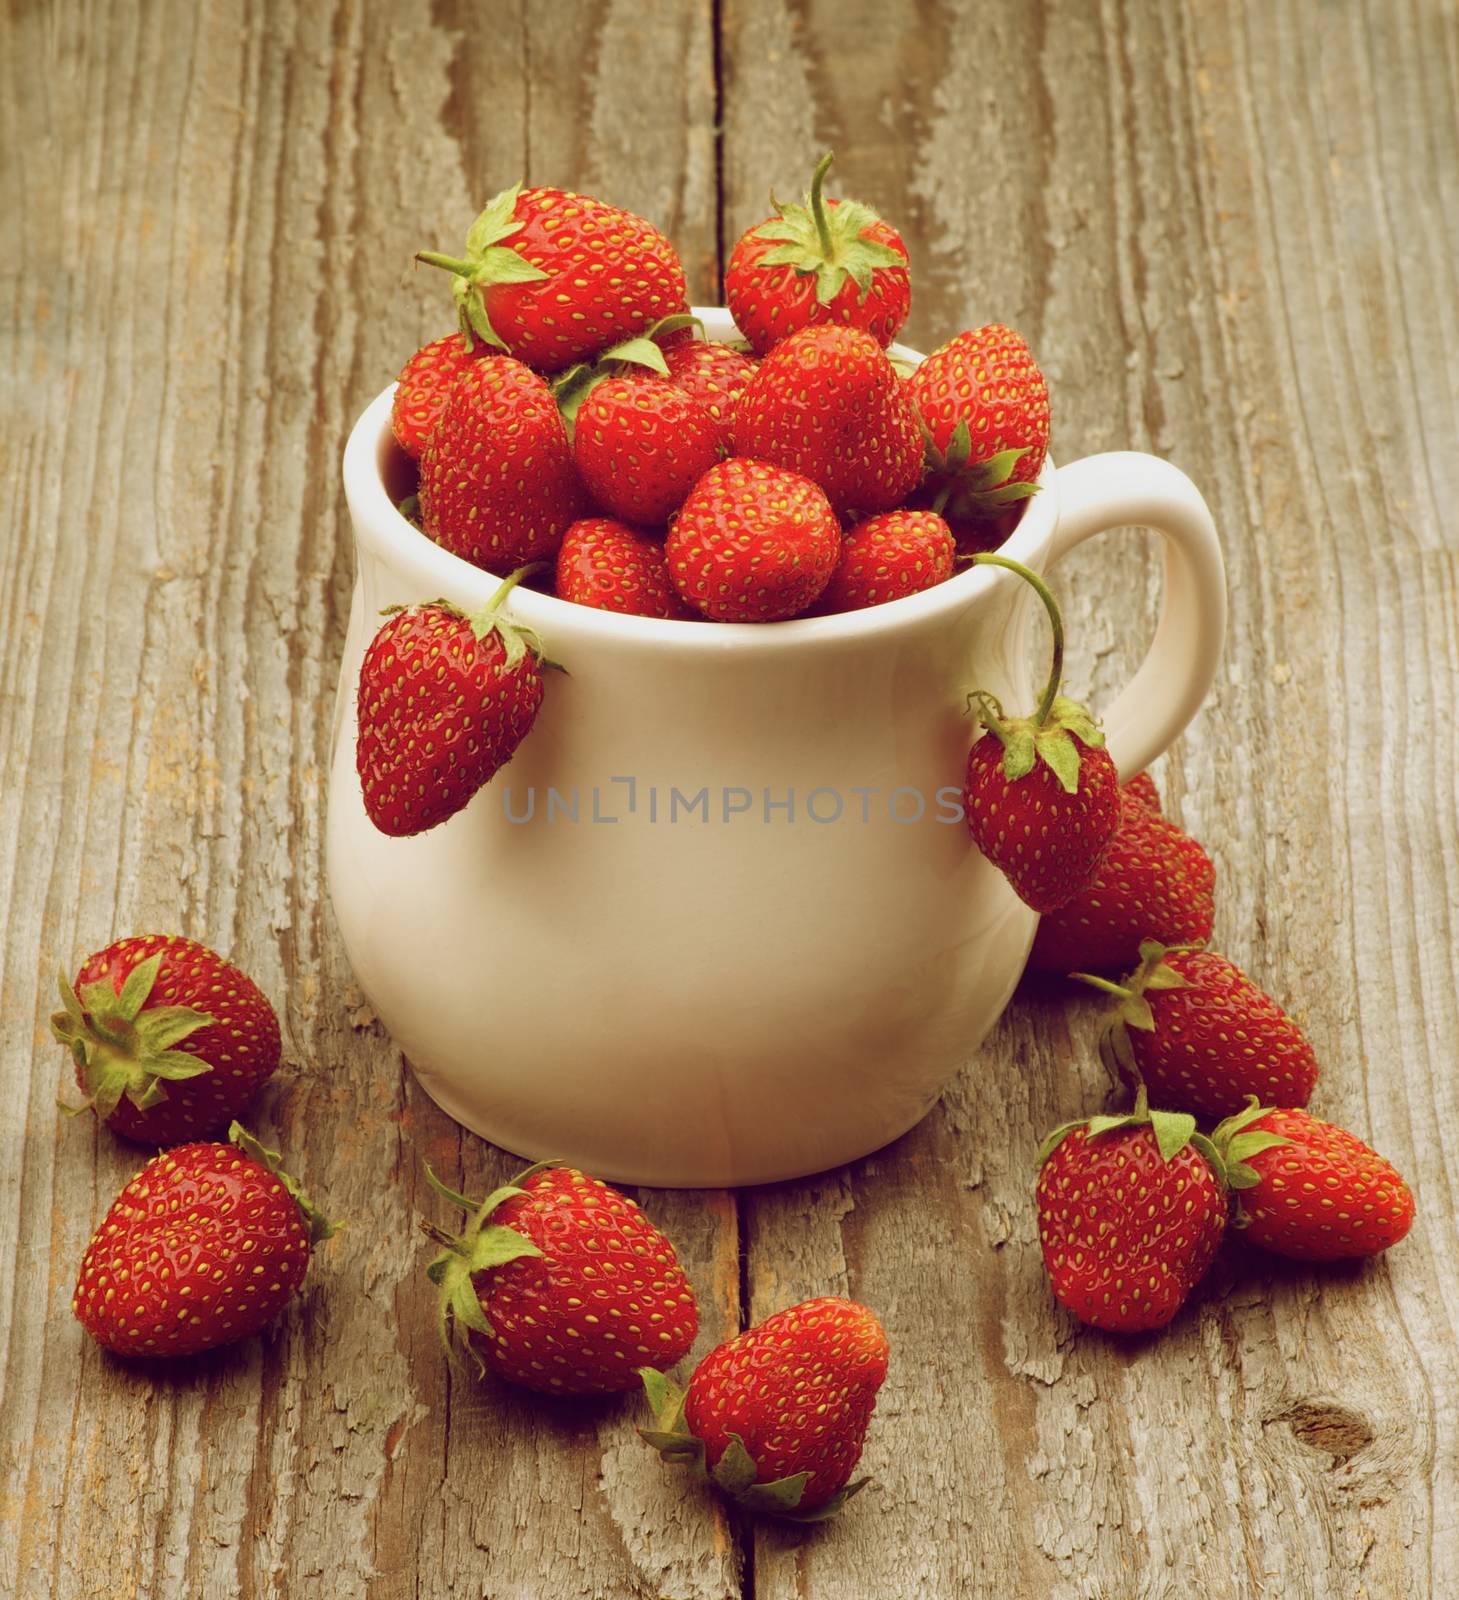 Ripe Forest Strawberries by zhekos